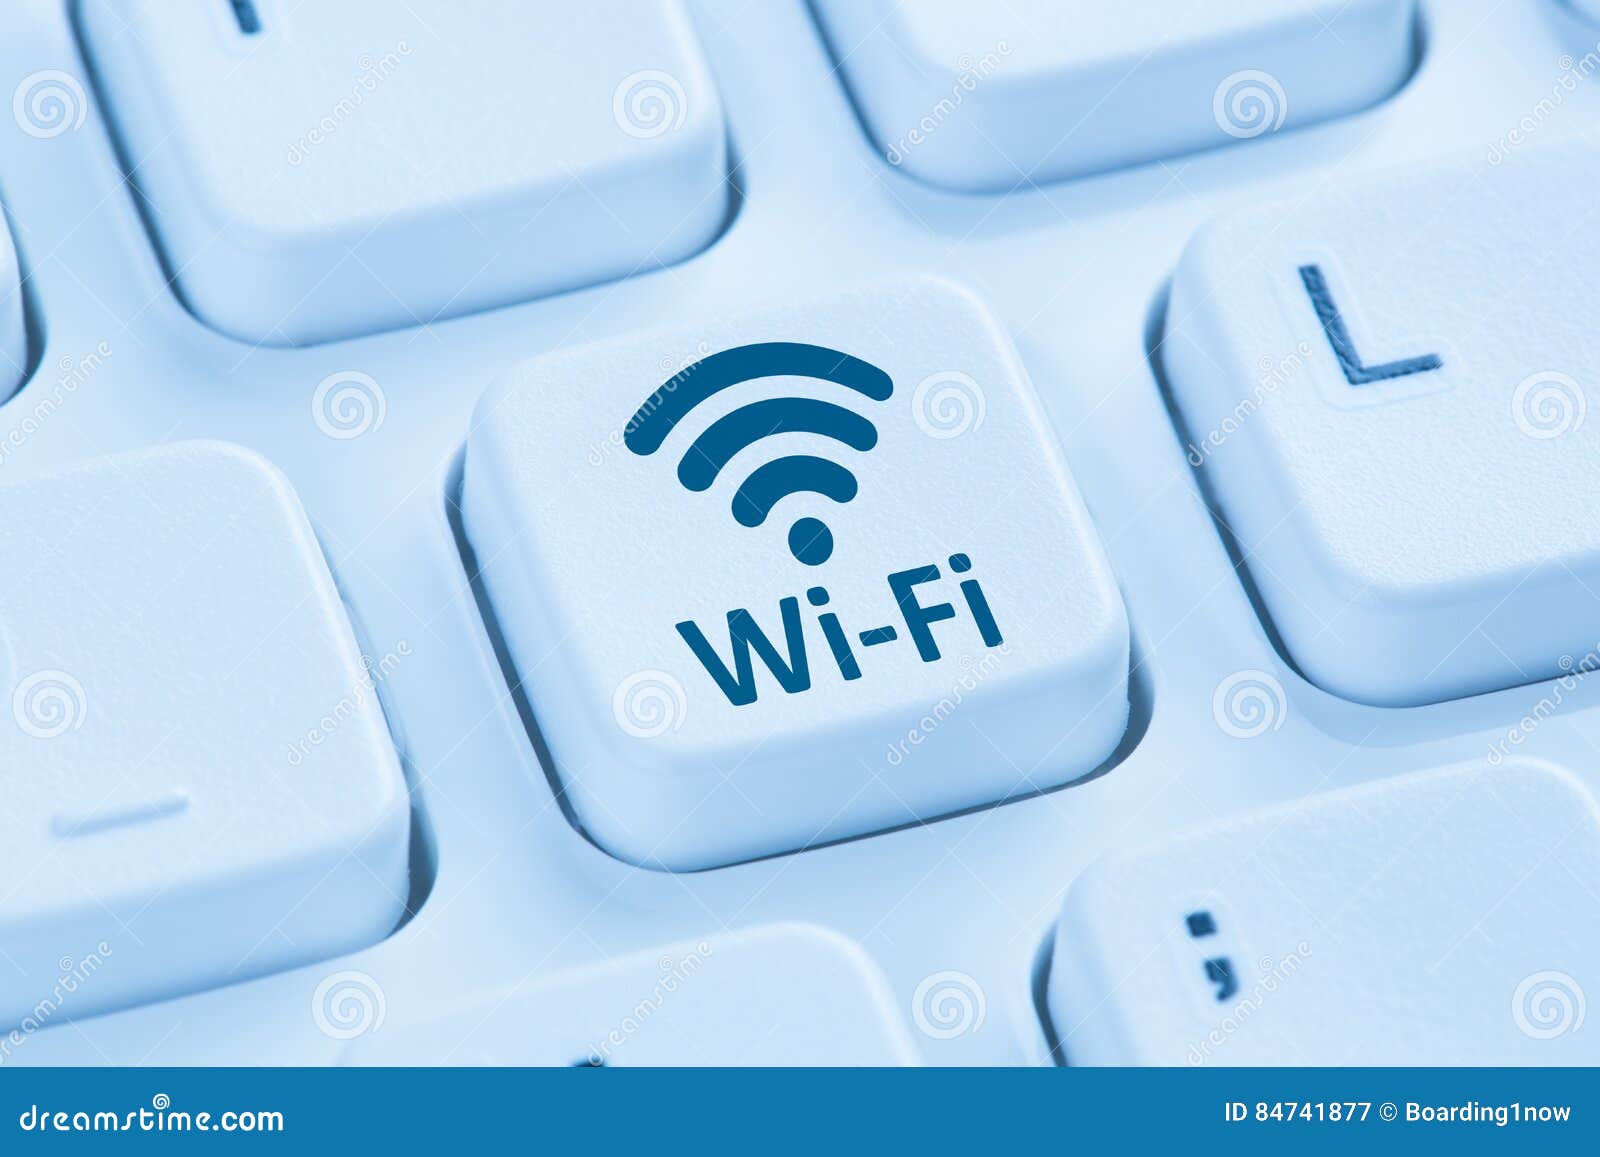 wi-fi wifi hotspot connection internet blue computer keyboard